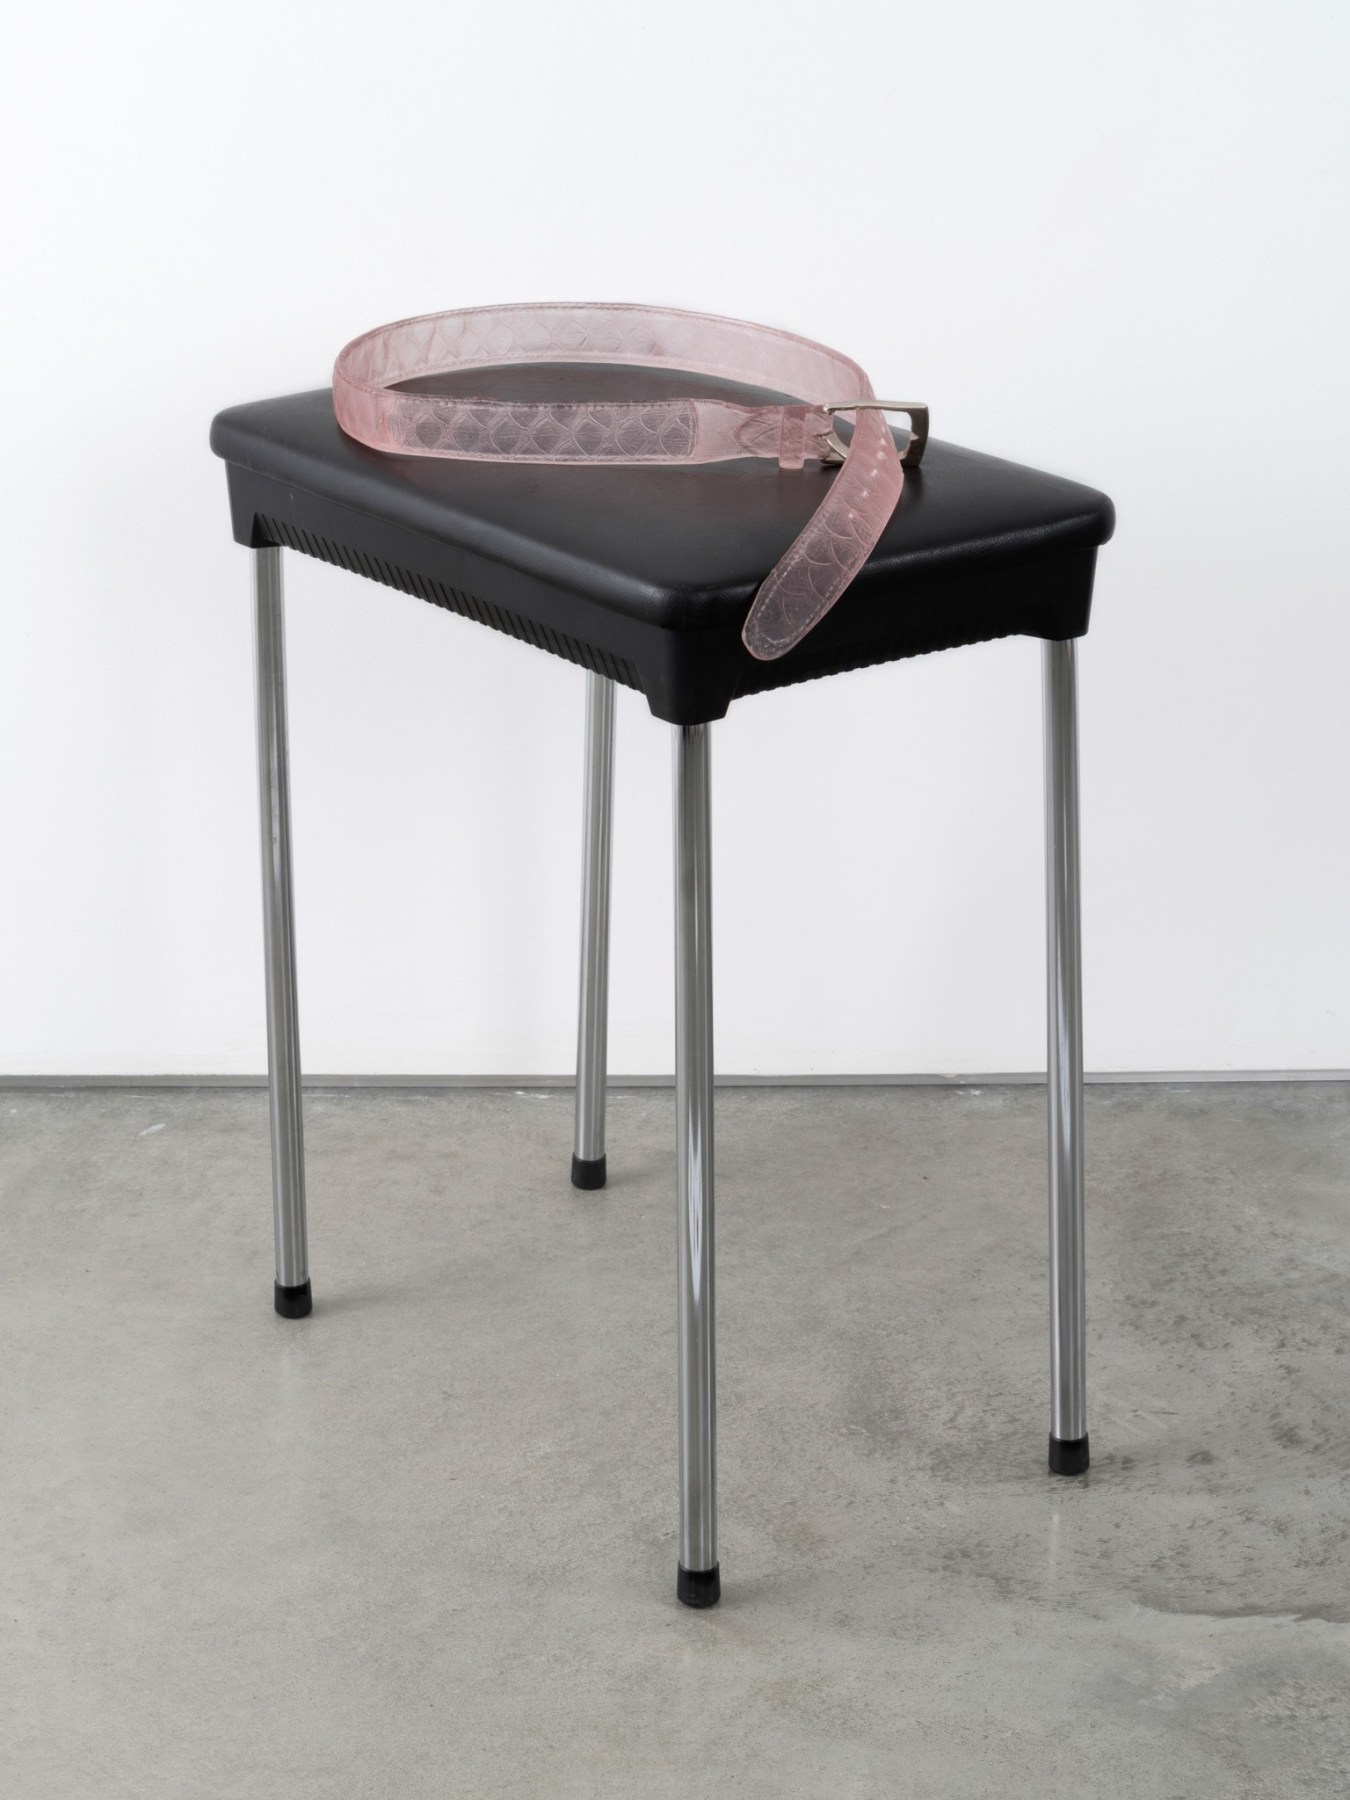 ￼￼Valentin Carron, Belt on piano stool, 2014